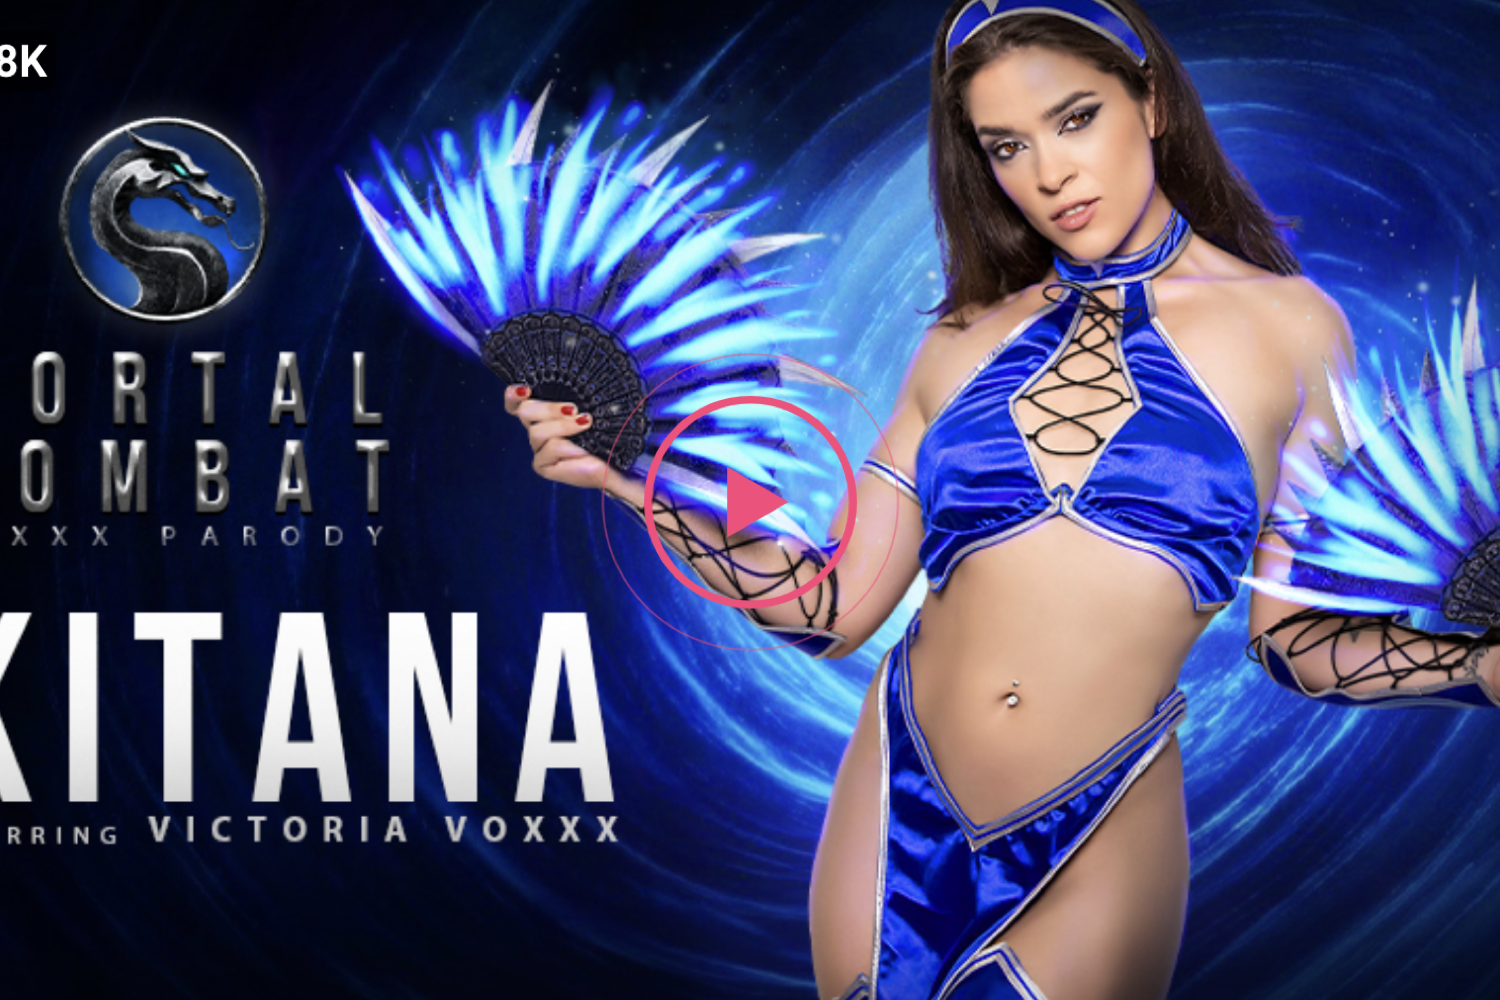 Mortal Kombat: Kitana (A XXX Parody) - Victoria Voxxx VR Porn - Victoria Voxxx Virtual Reality Porn